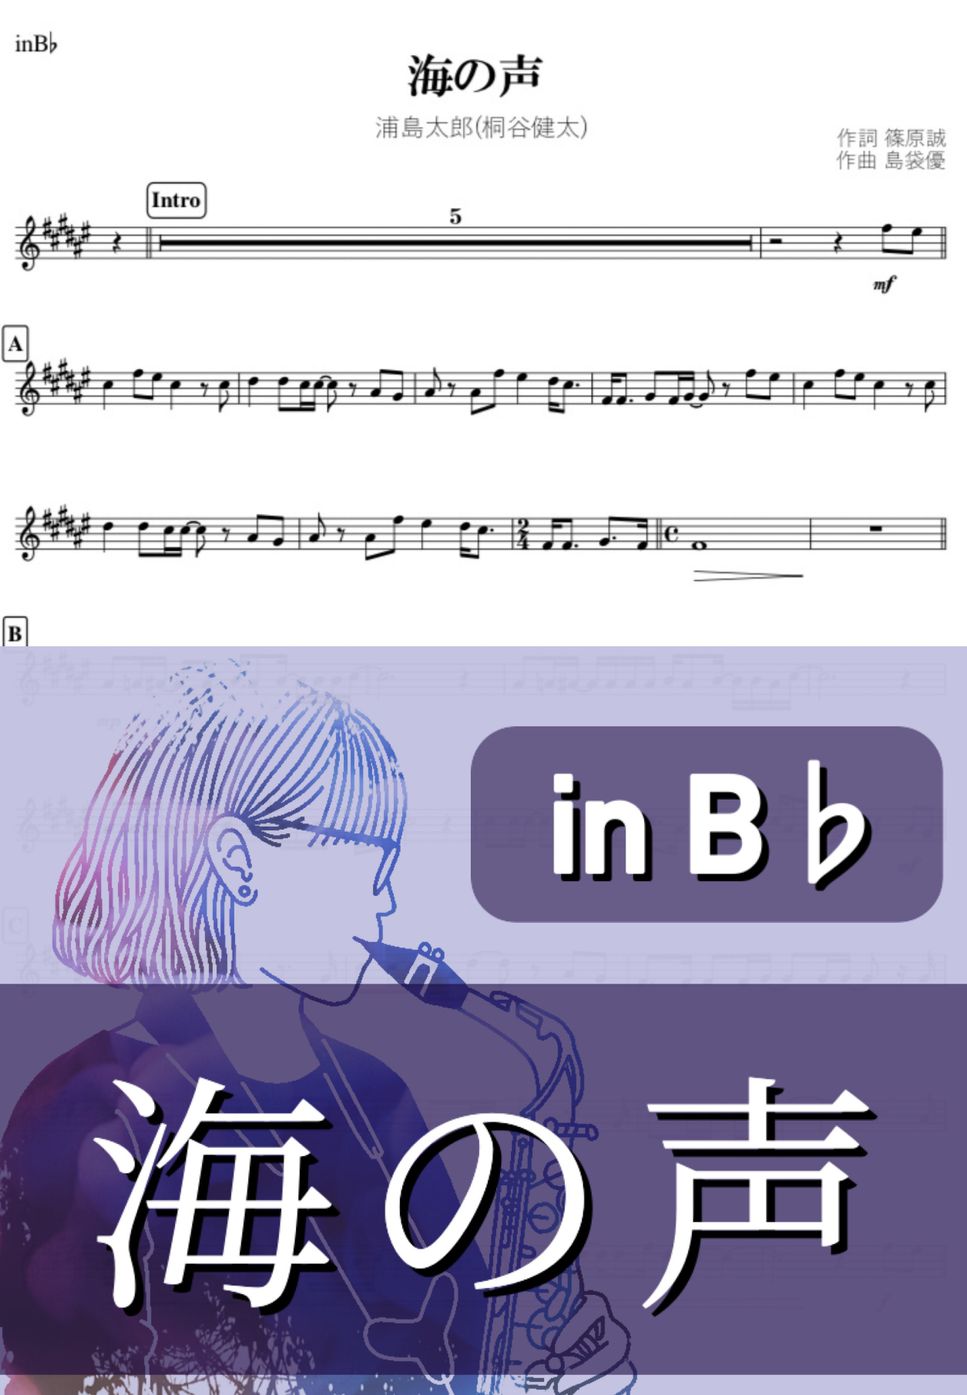 桐谷健太 - 海の声 (B♭) by kanamusic